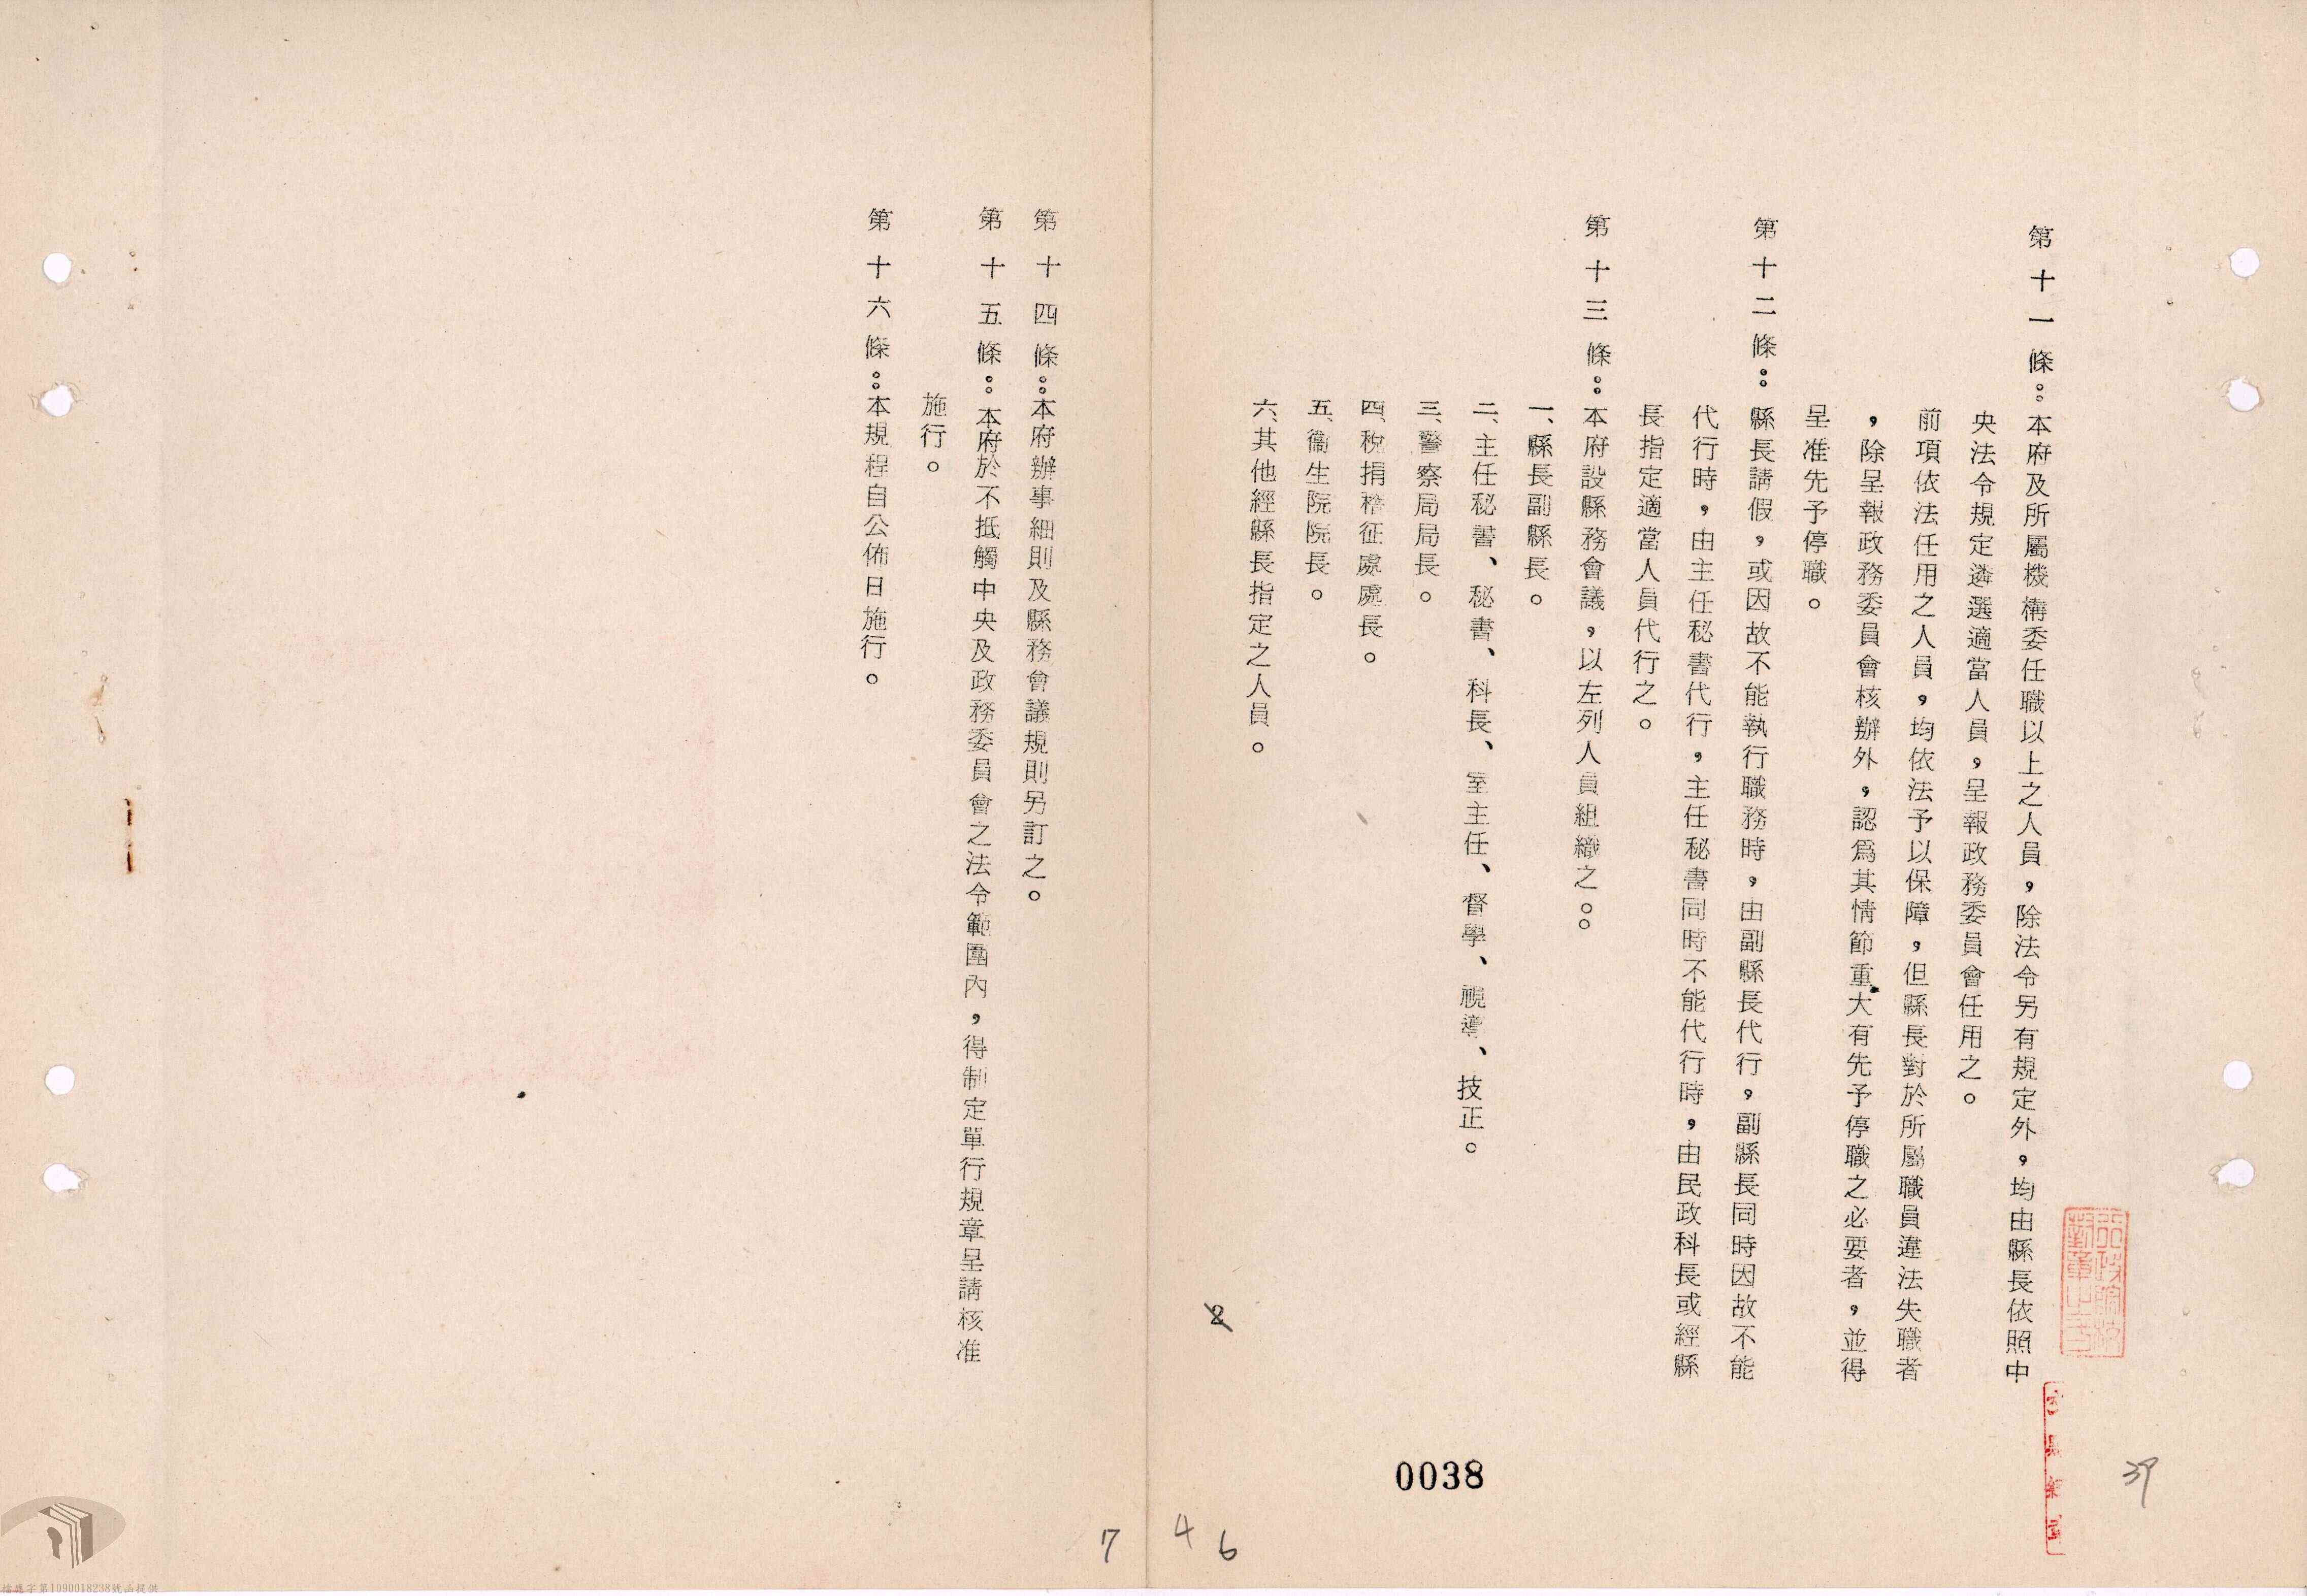 February 1, 1972, Organizational Regulations of Kinmen County Government, Fujian Province.